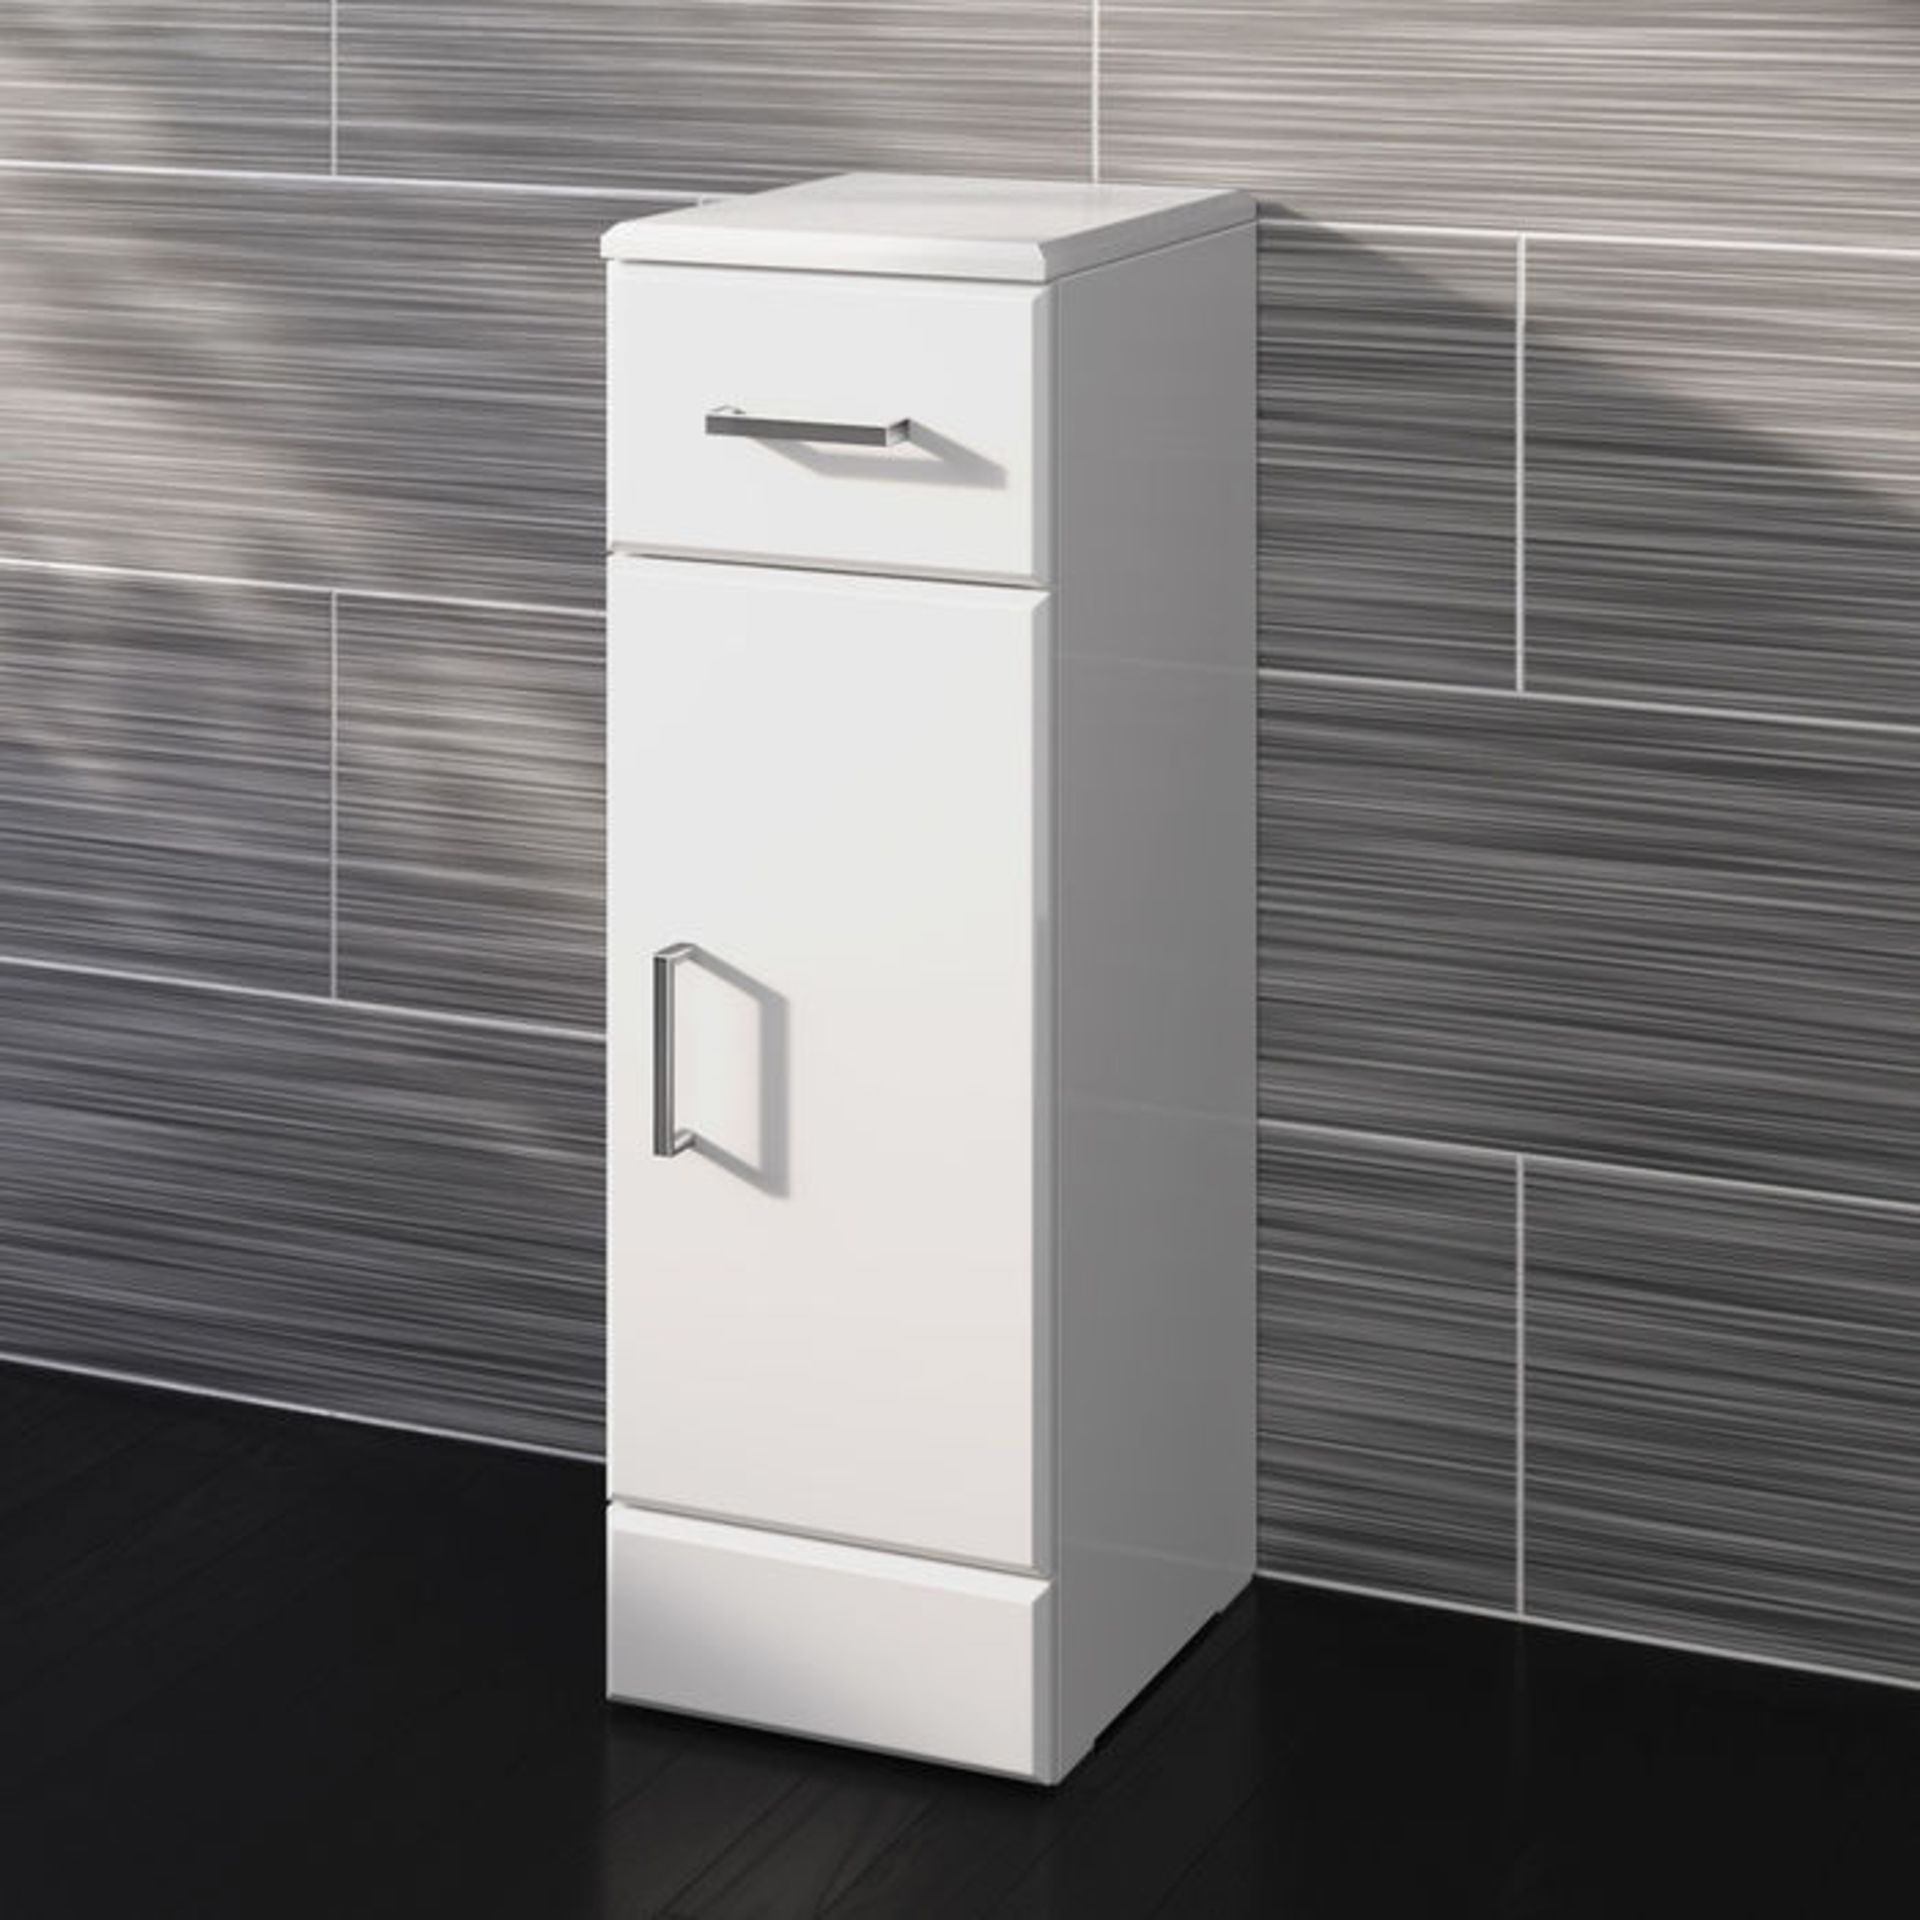 (L95) 250x300mm Quartz Gloss White Small Side Cabinet Unit. RRP £143.99. Pristine gloss white finish - Image 2 of 3